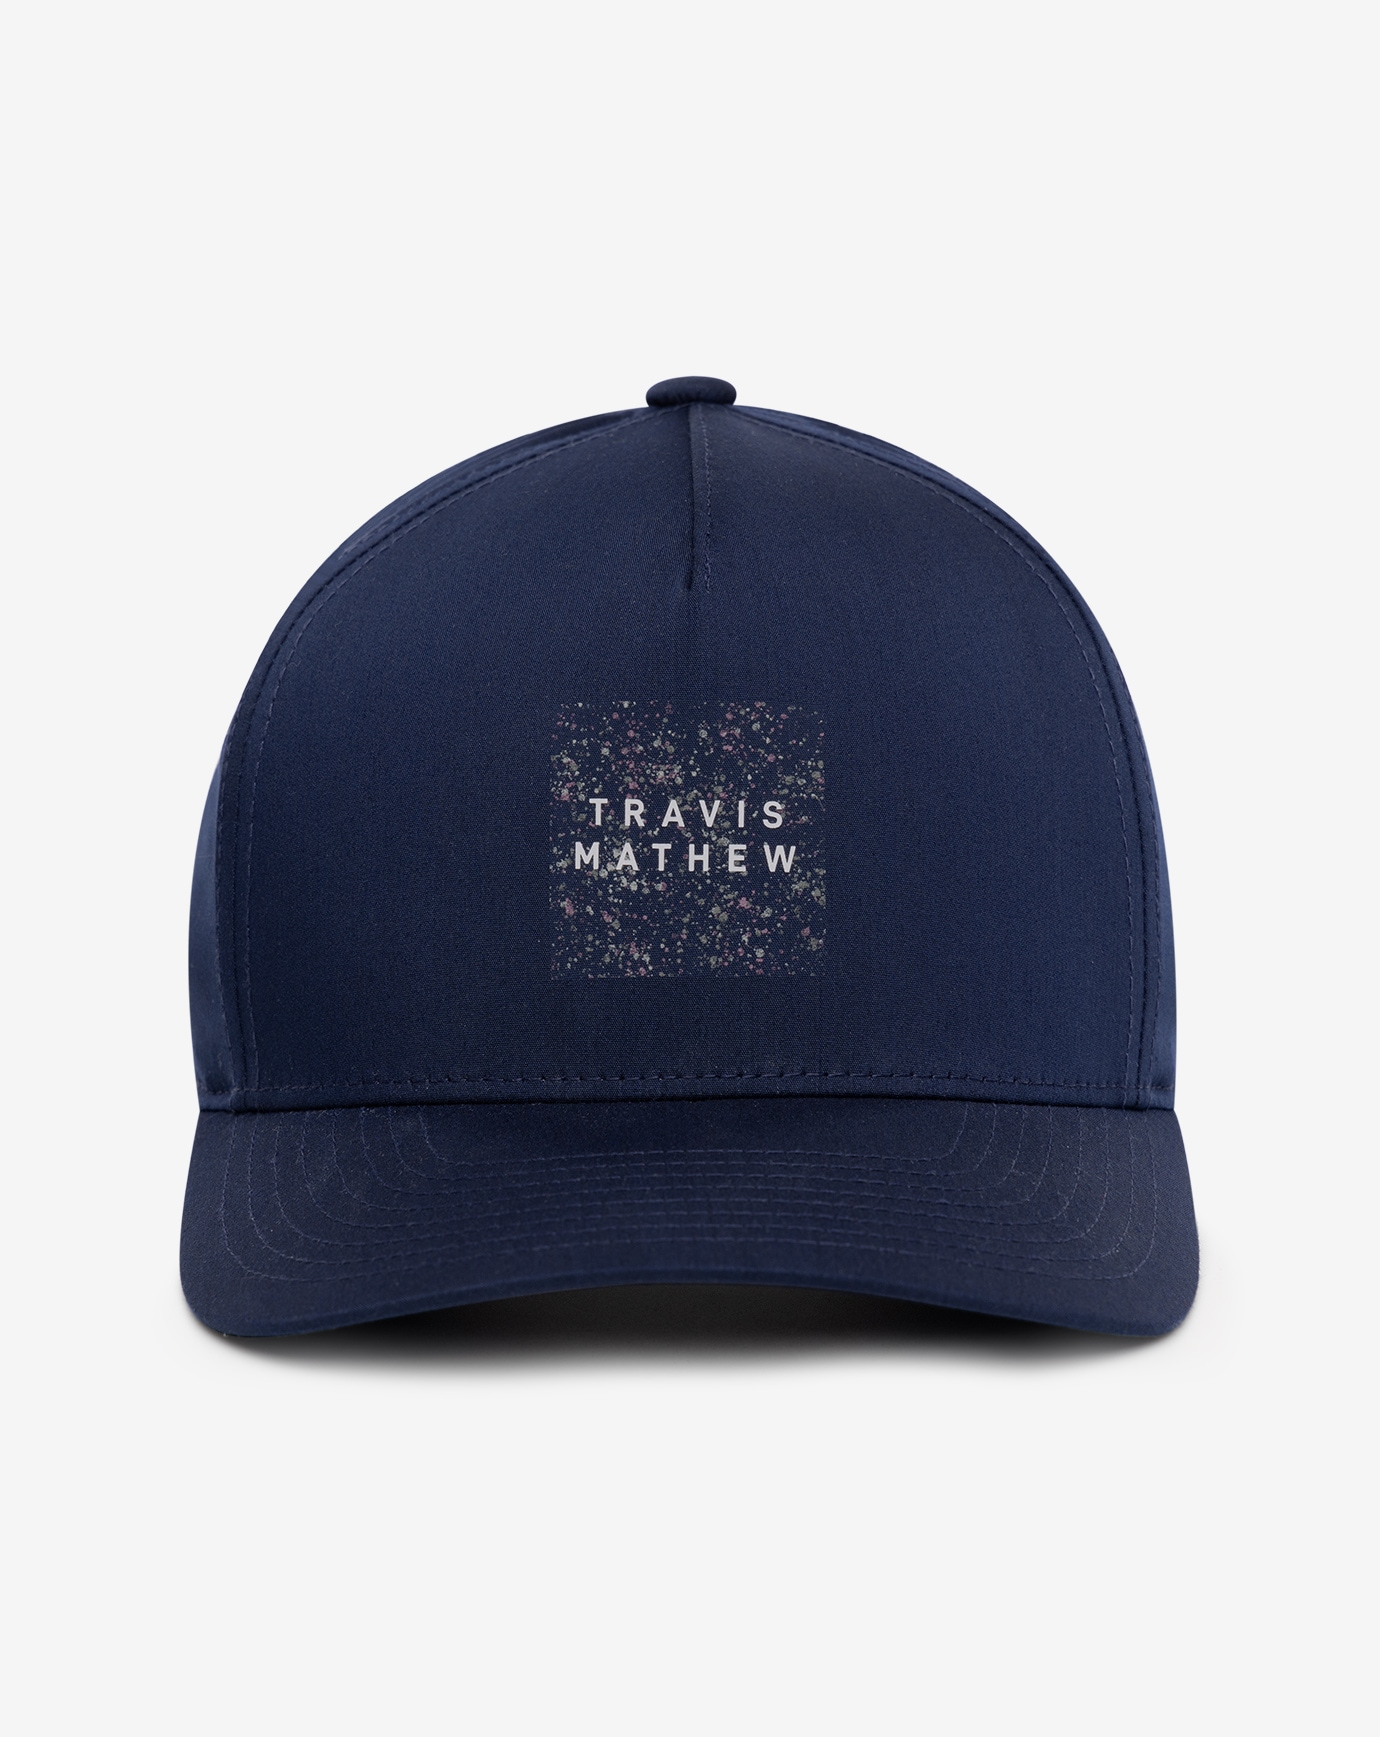 Related Product - SPLATTER PRINT SNAPBACK HAT